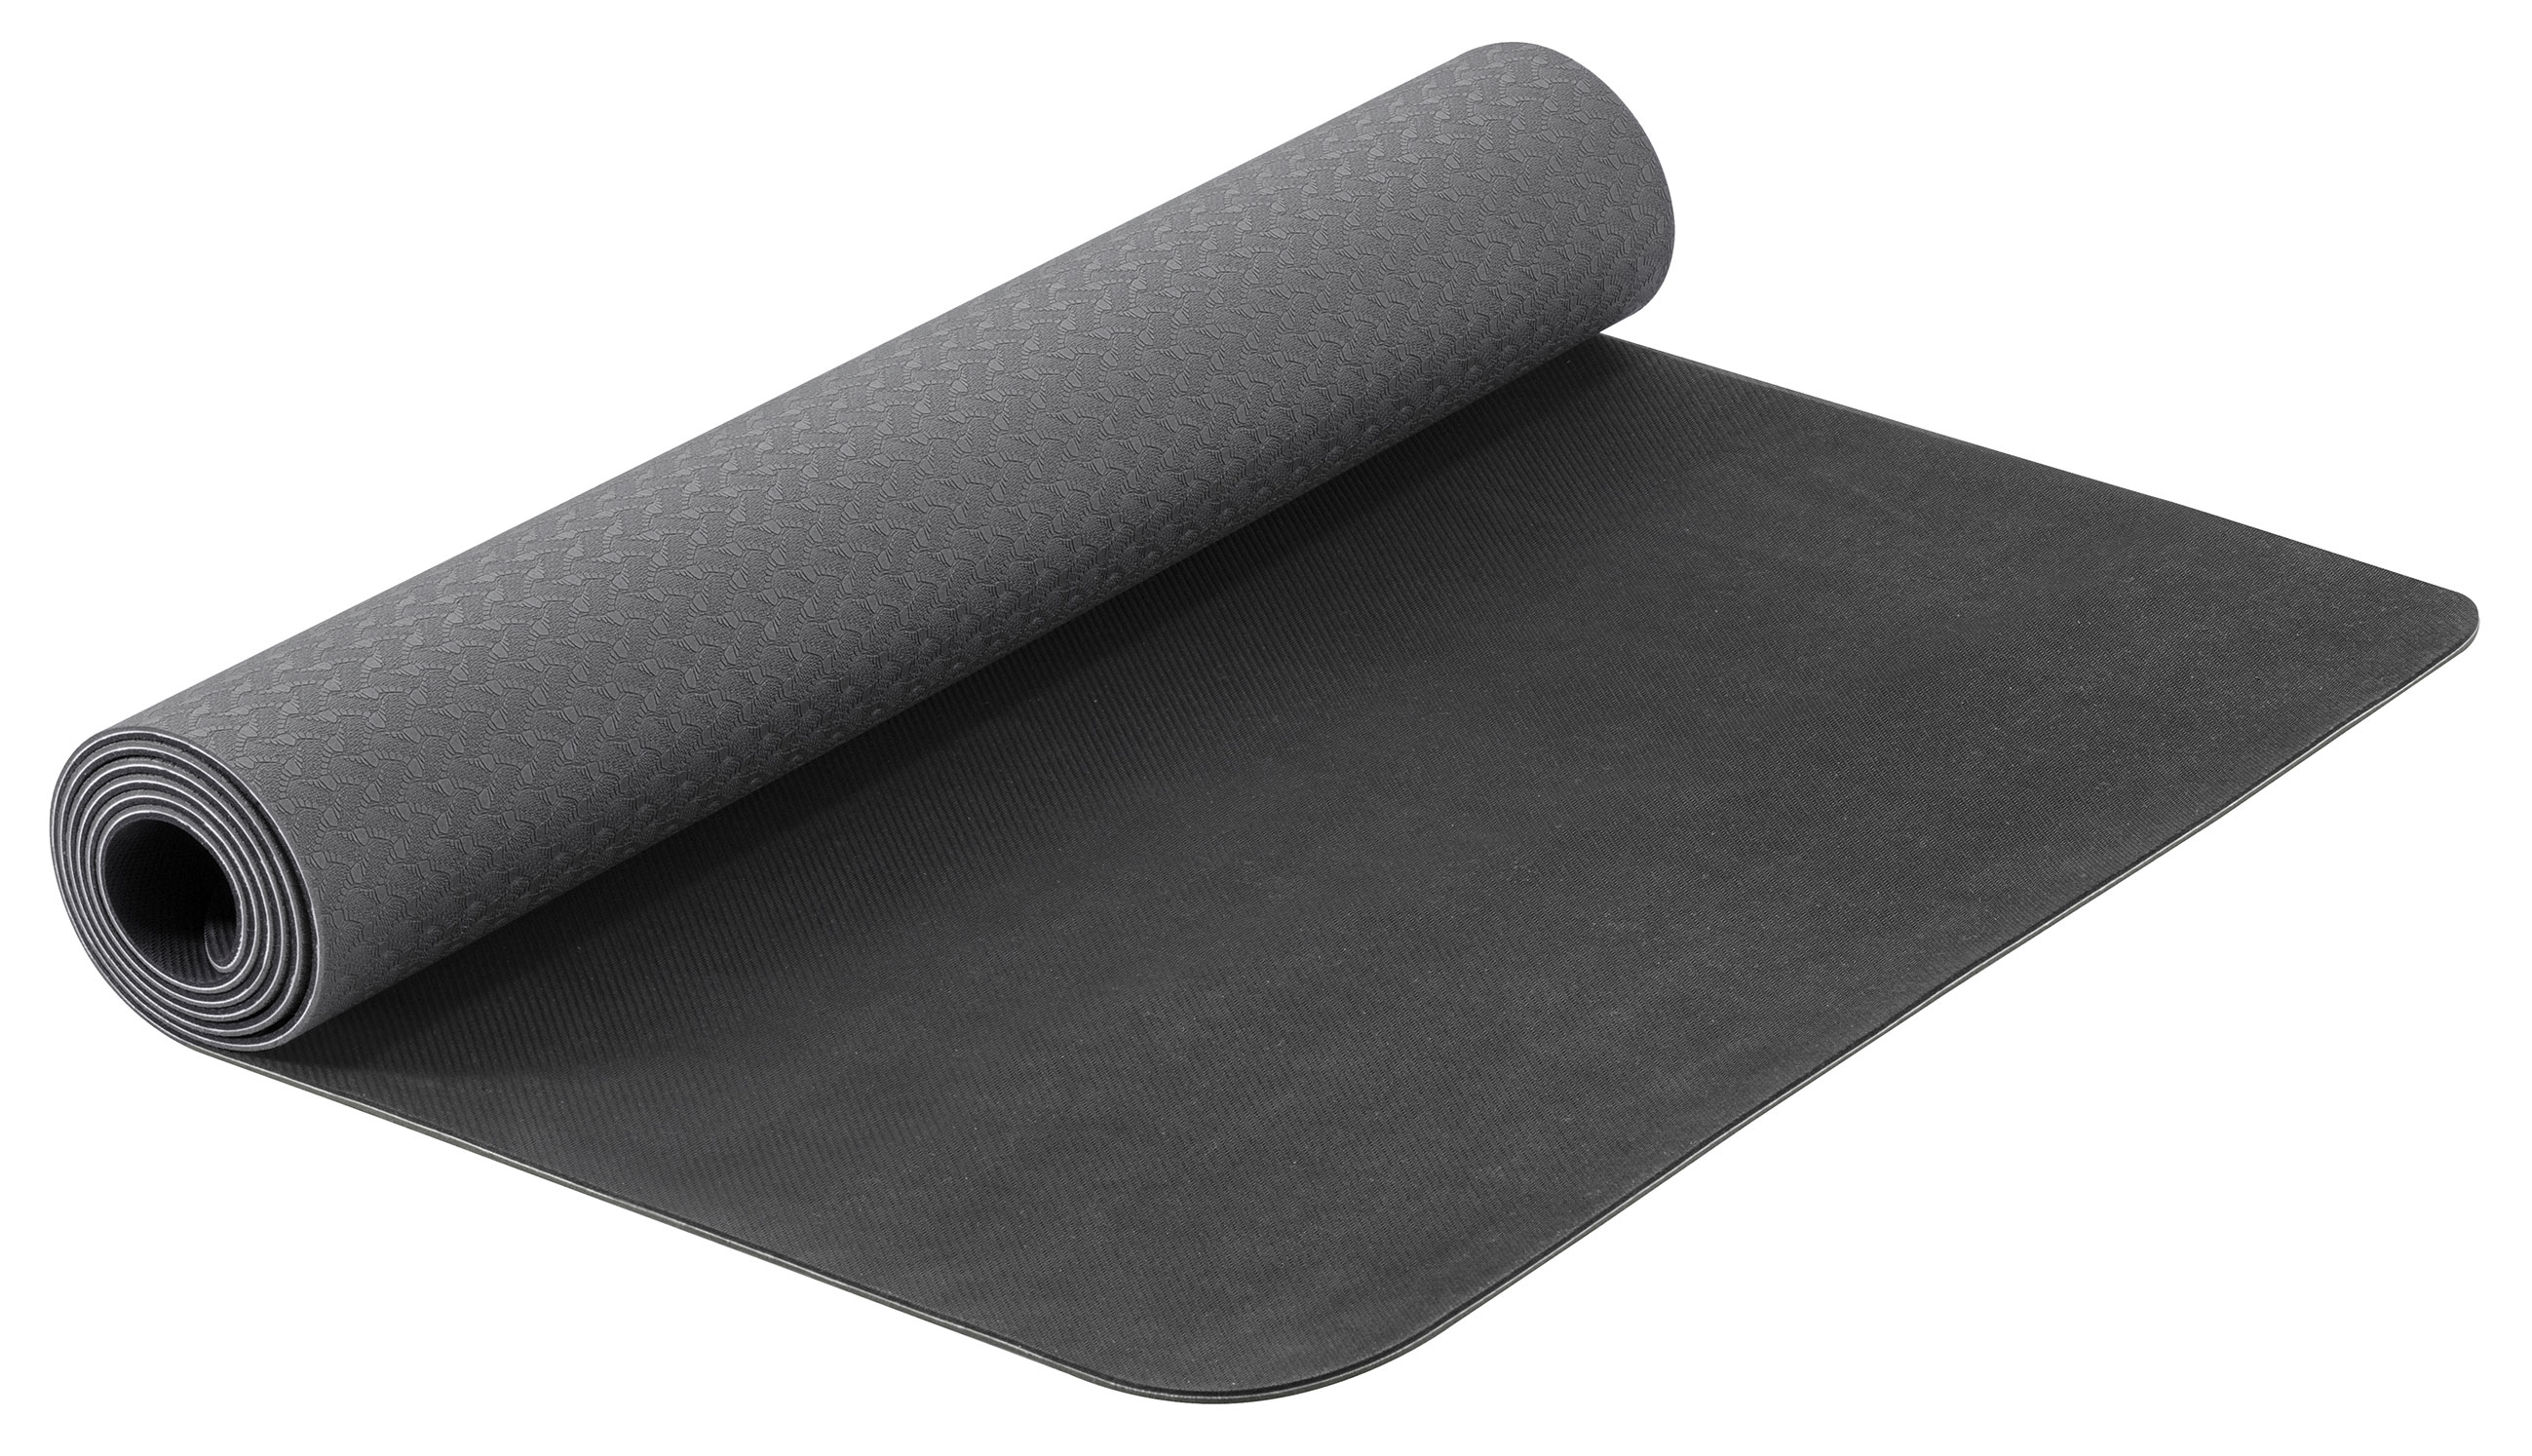 Yoga Eco Pro mat